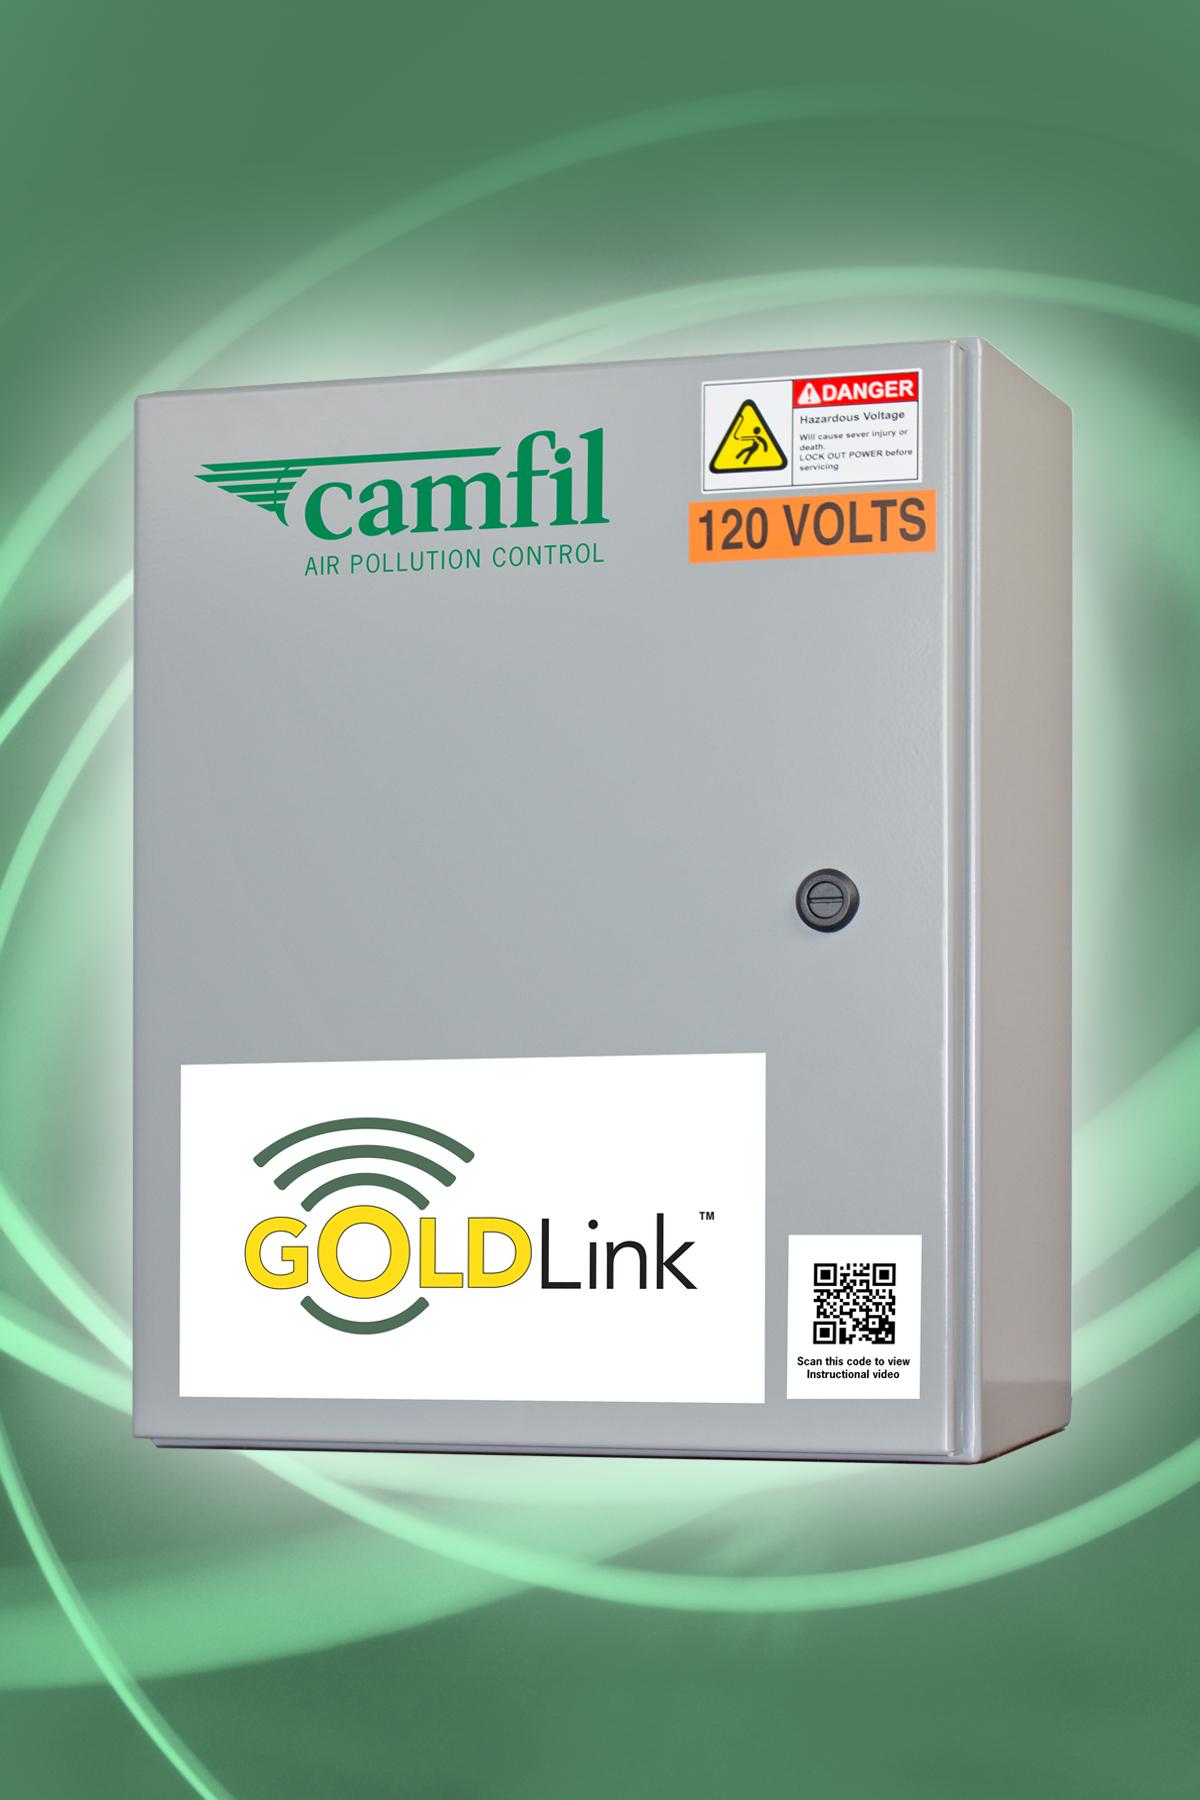 Camfil-Air-Pollution-Control-gold-link-controller-hi.jpg